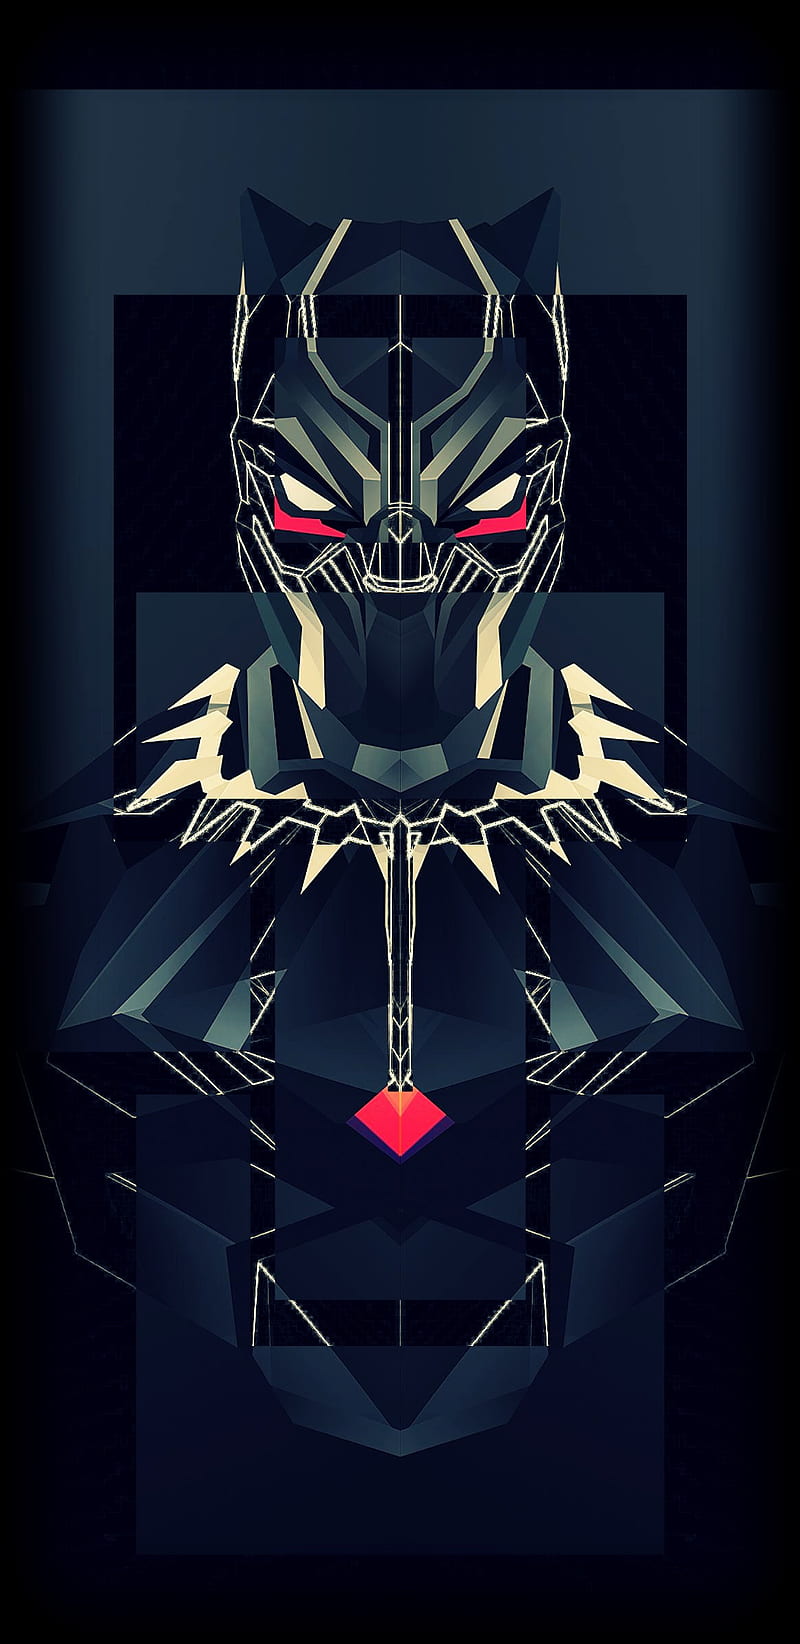 Black Panther Wakanda Forever 4K wallpaper download